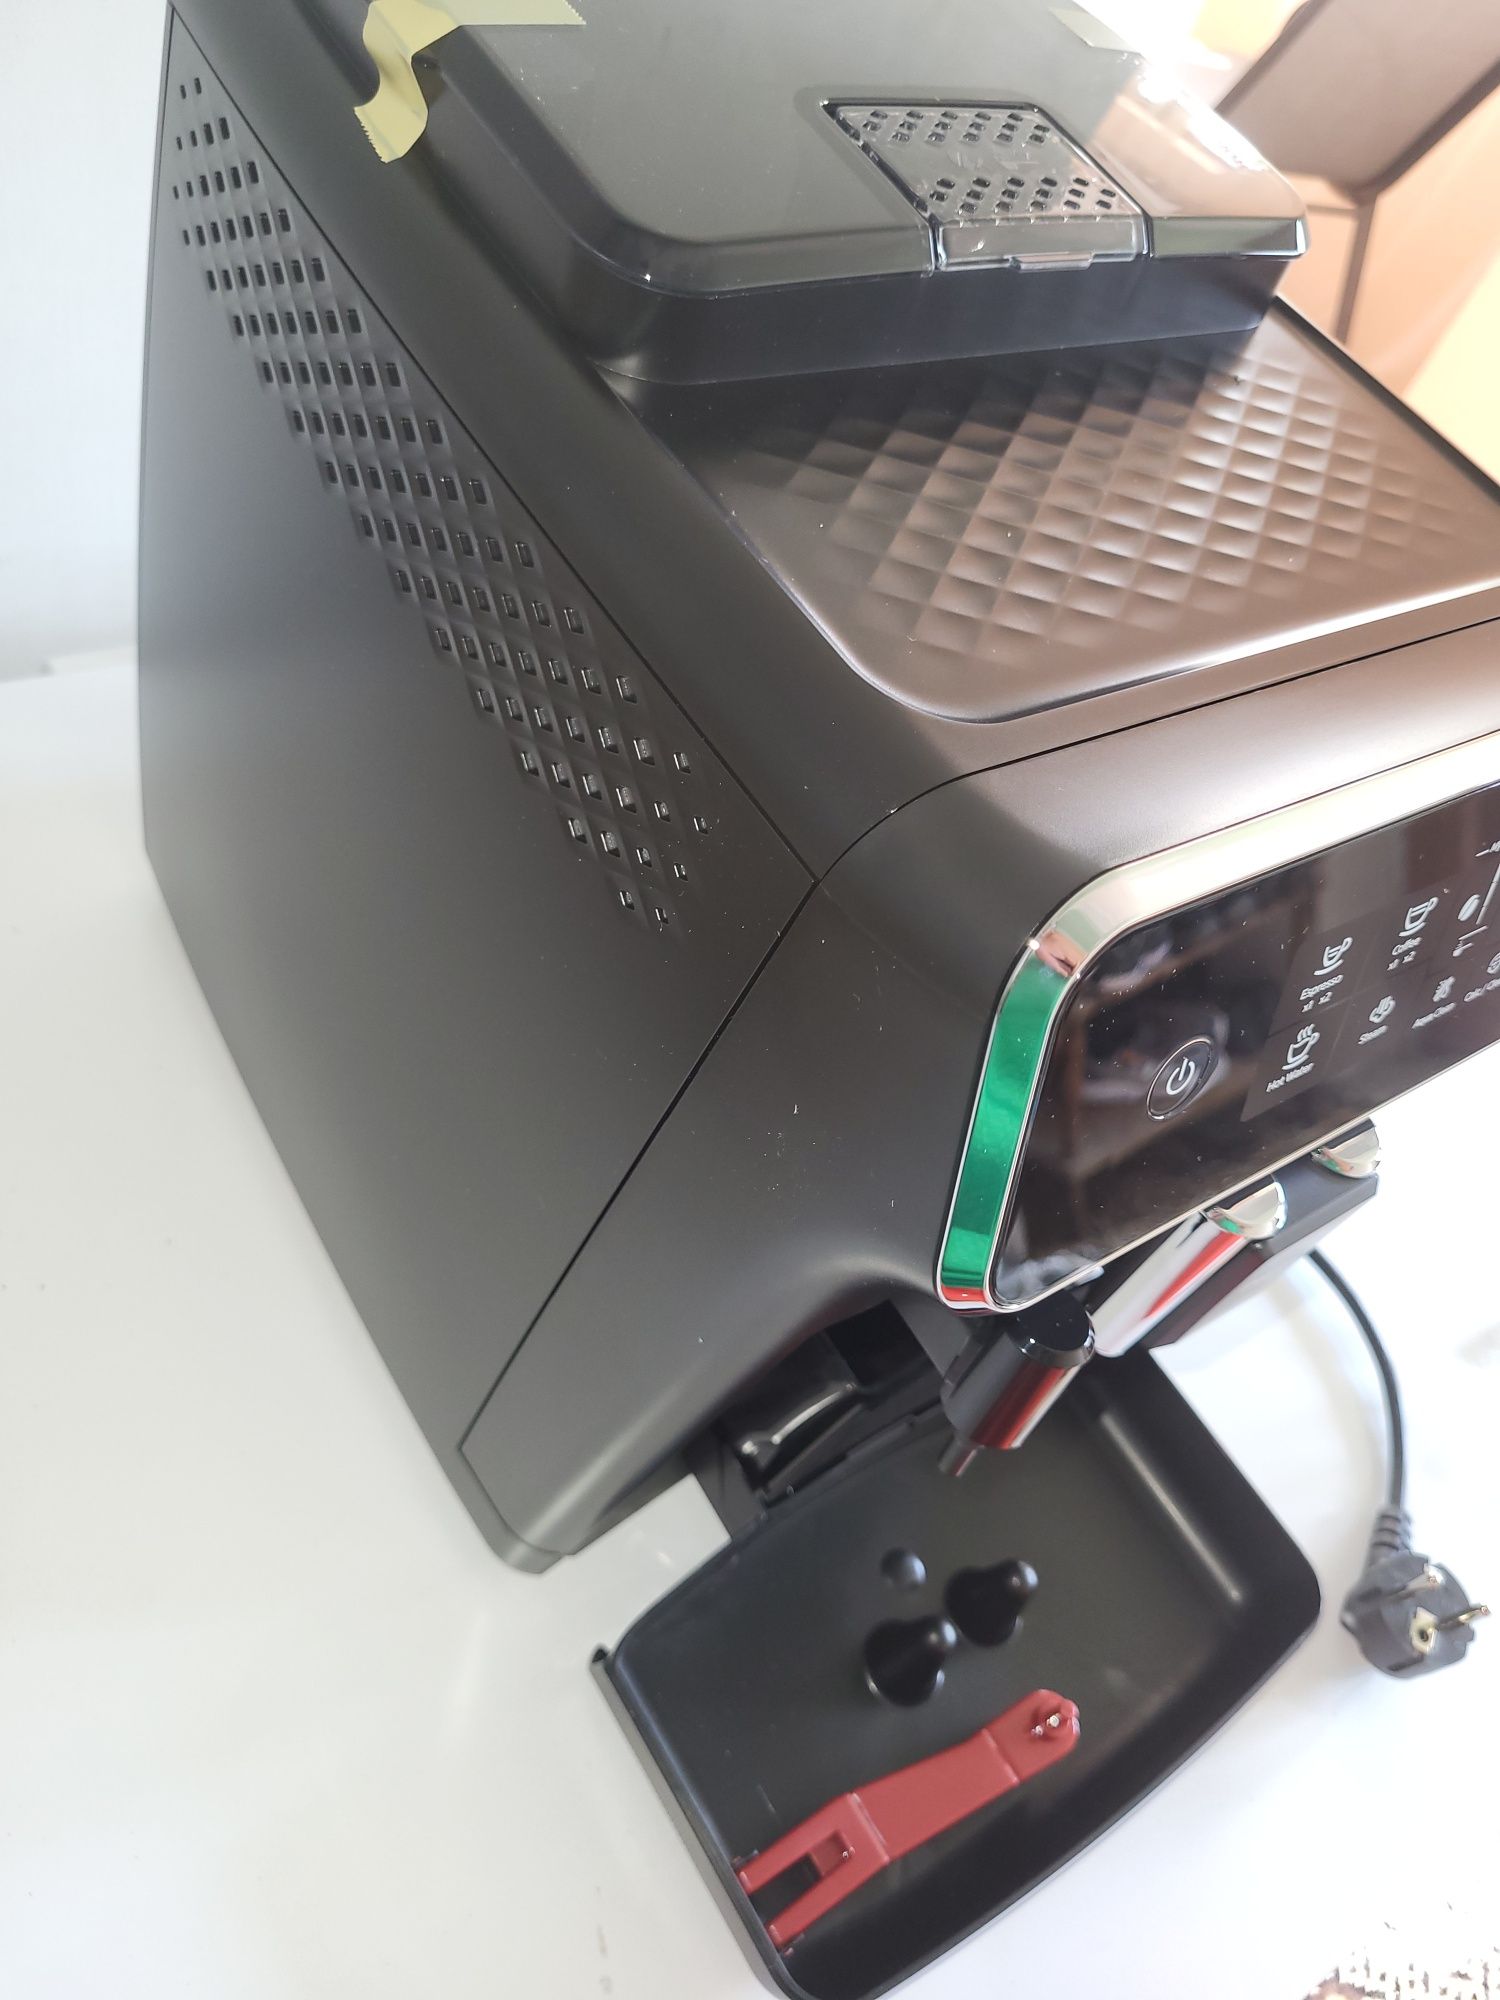 Expresor de cafea automat Phillips 2200 series negru